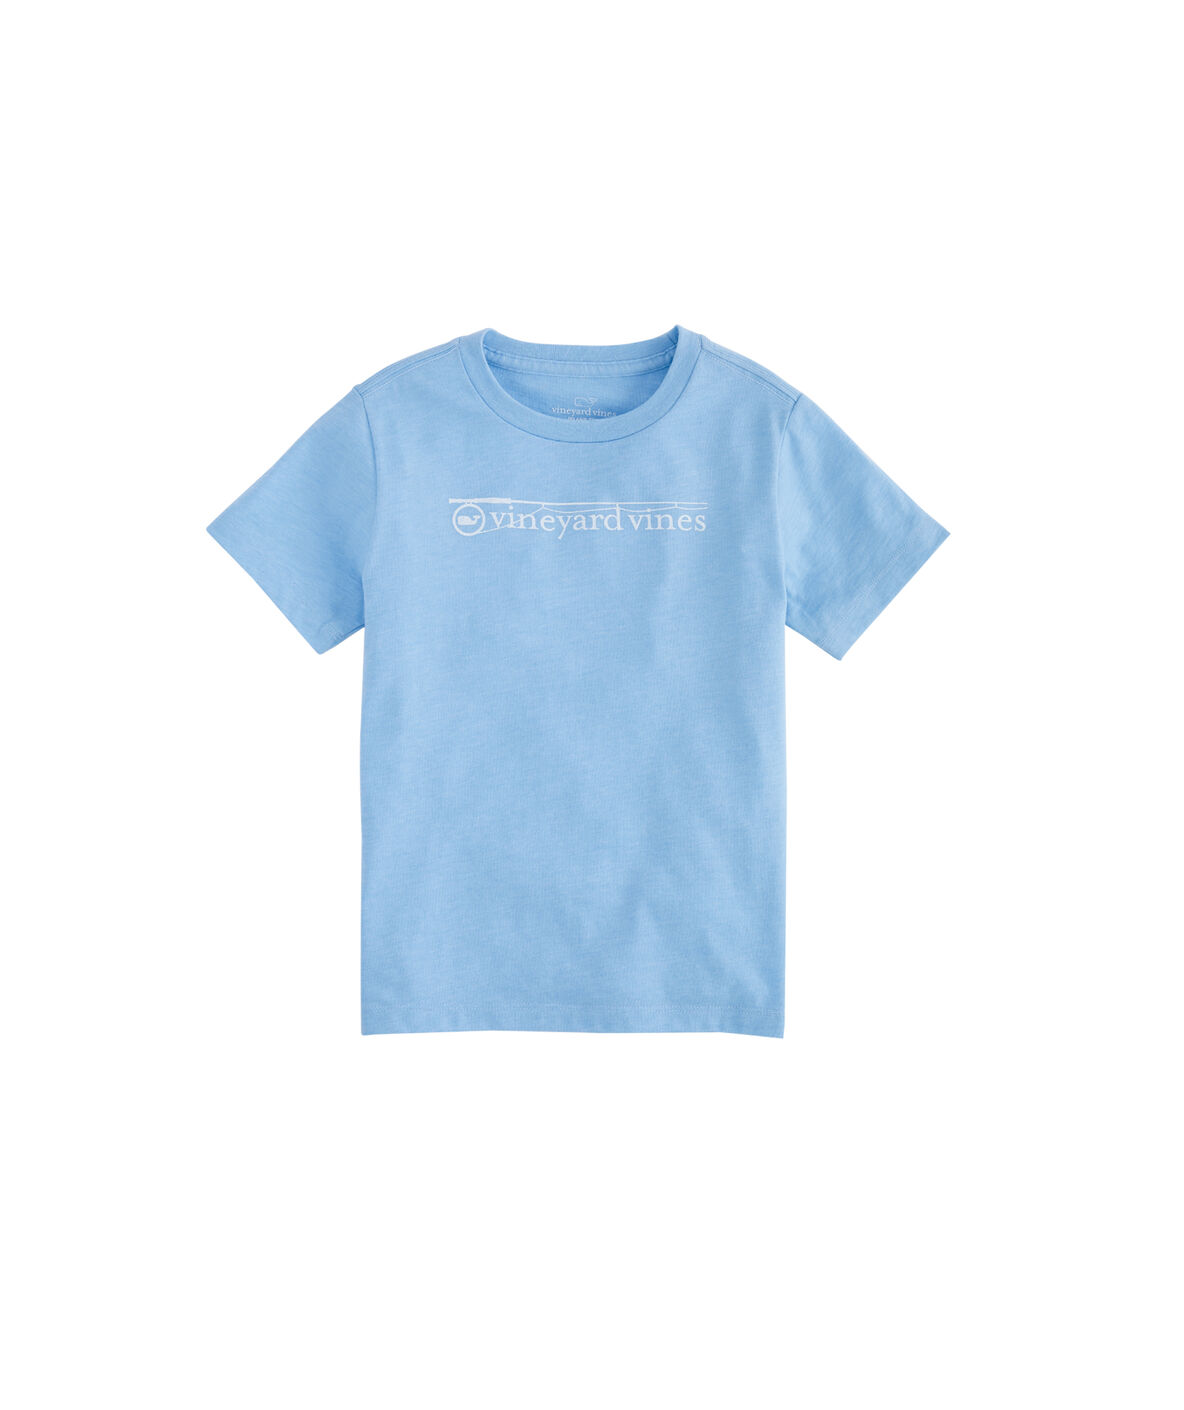 Shop Boys Fishing Rod Island T-Shirt at vineyard vines